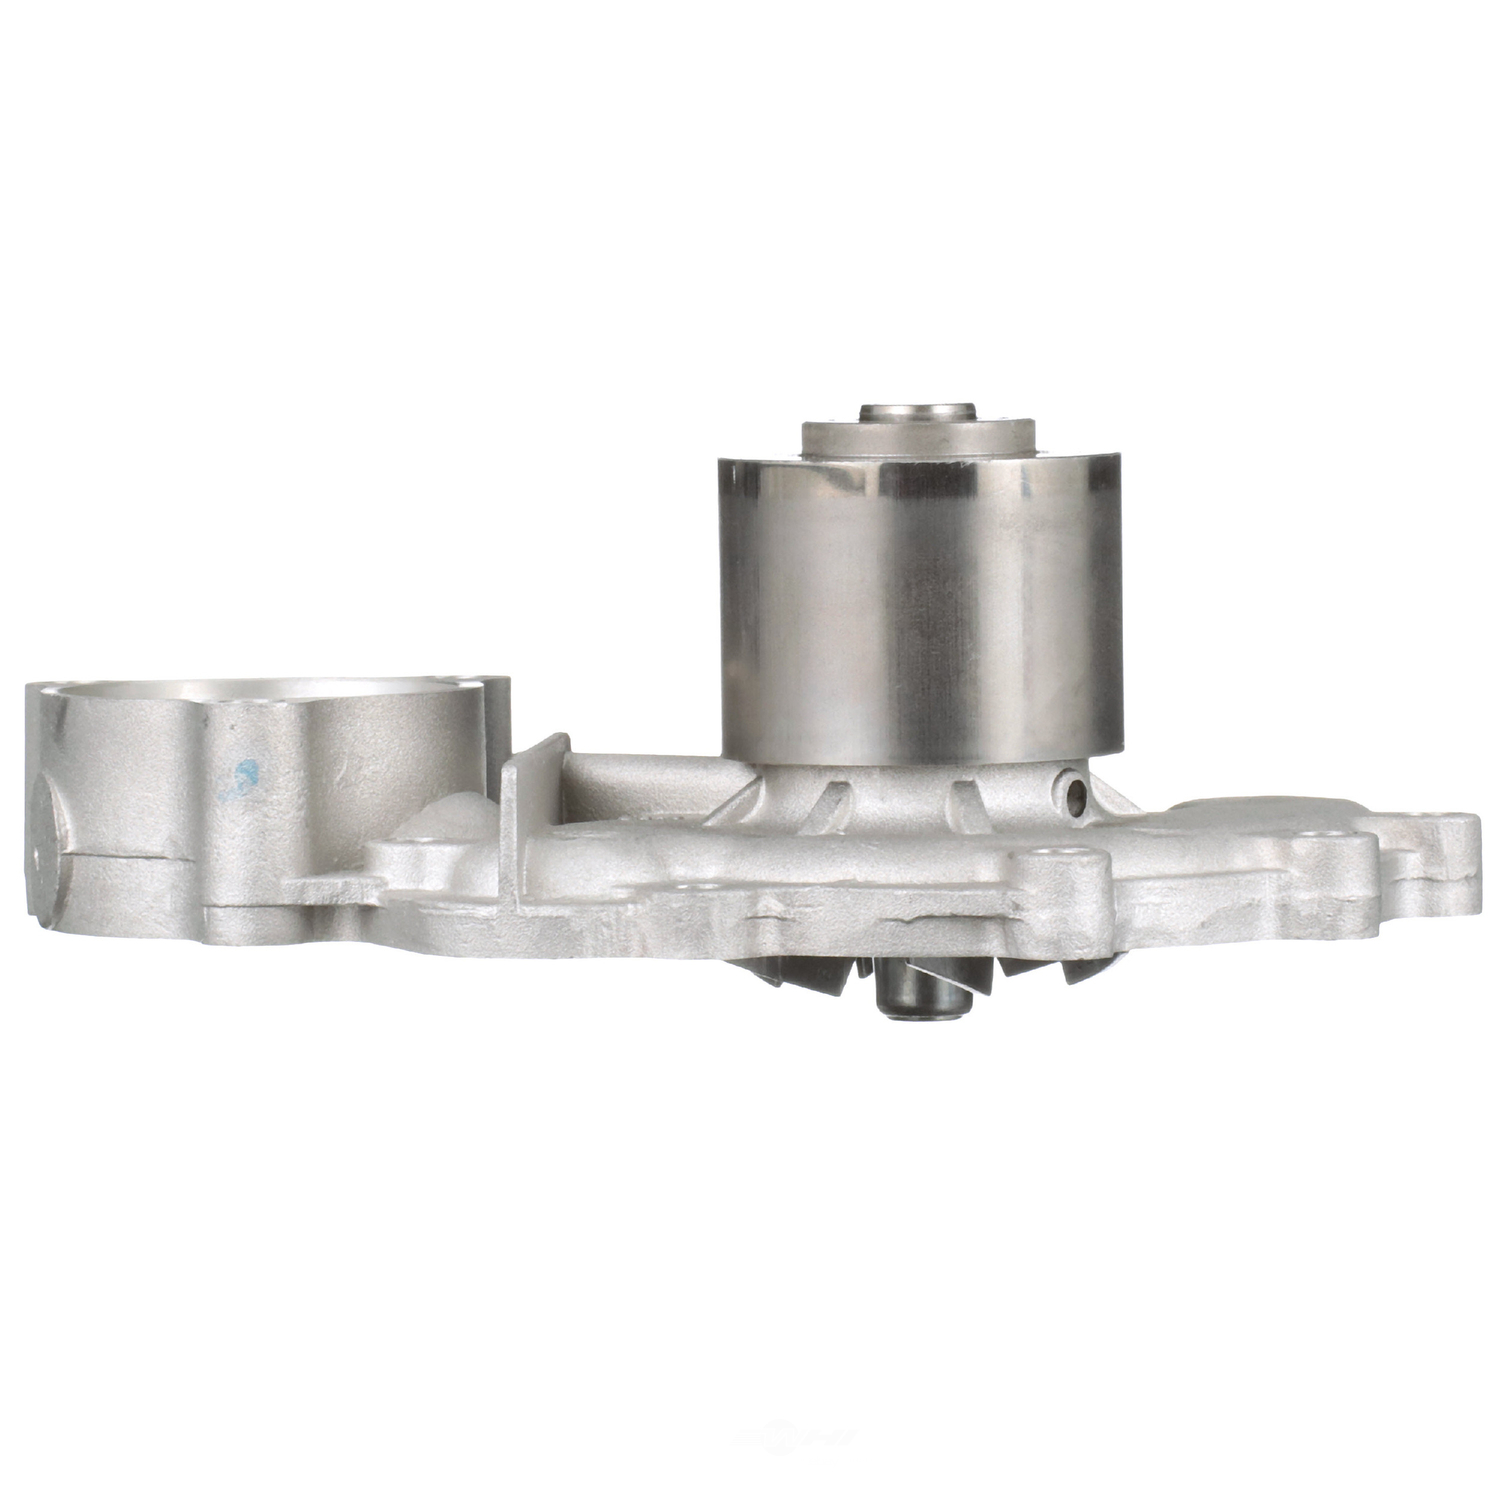 AIRTEX AUTOMOTIVE DIVISION - Engine Water Pump - ATN AW9325